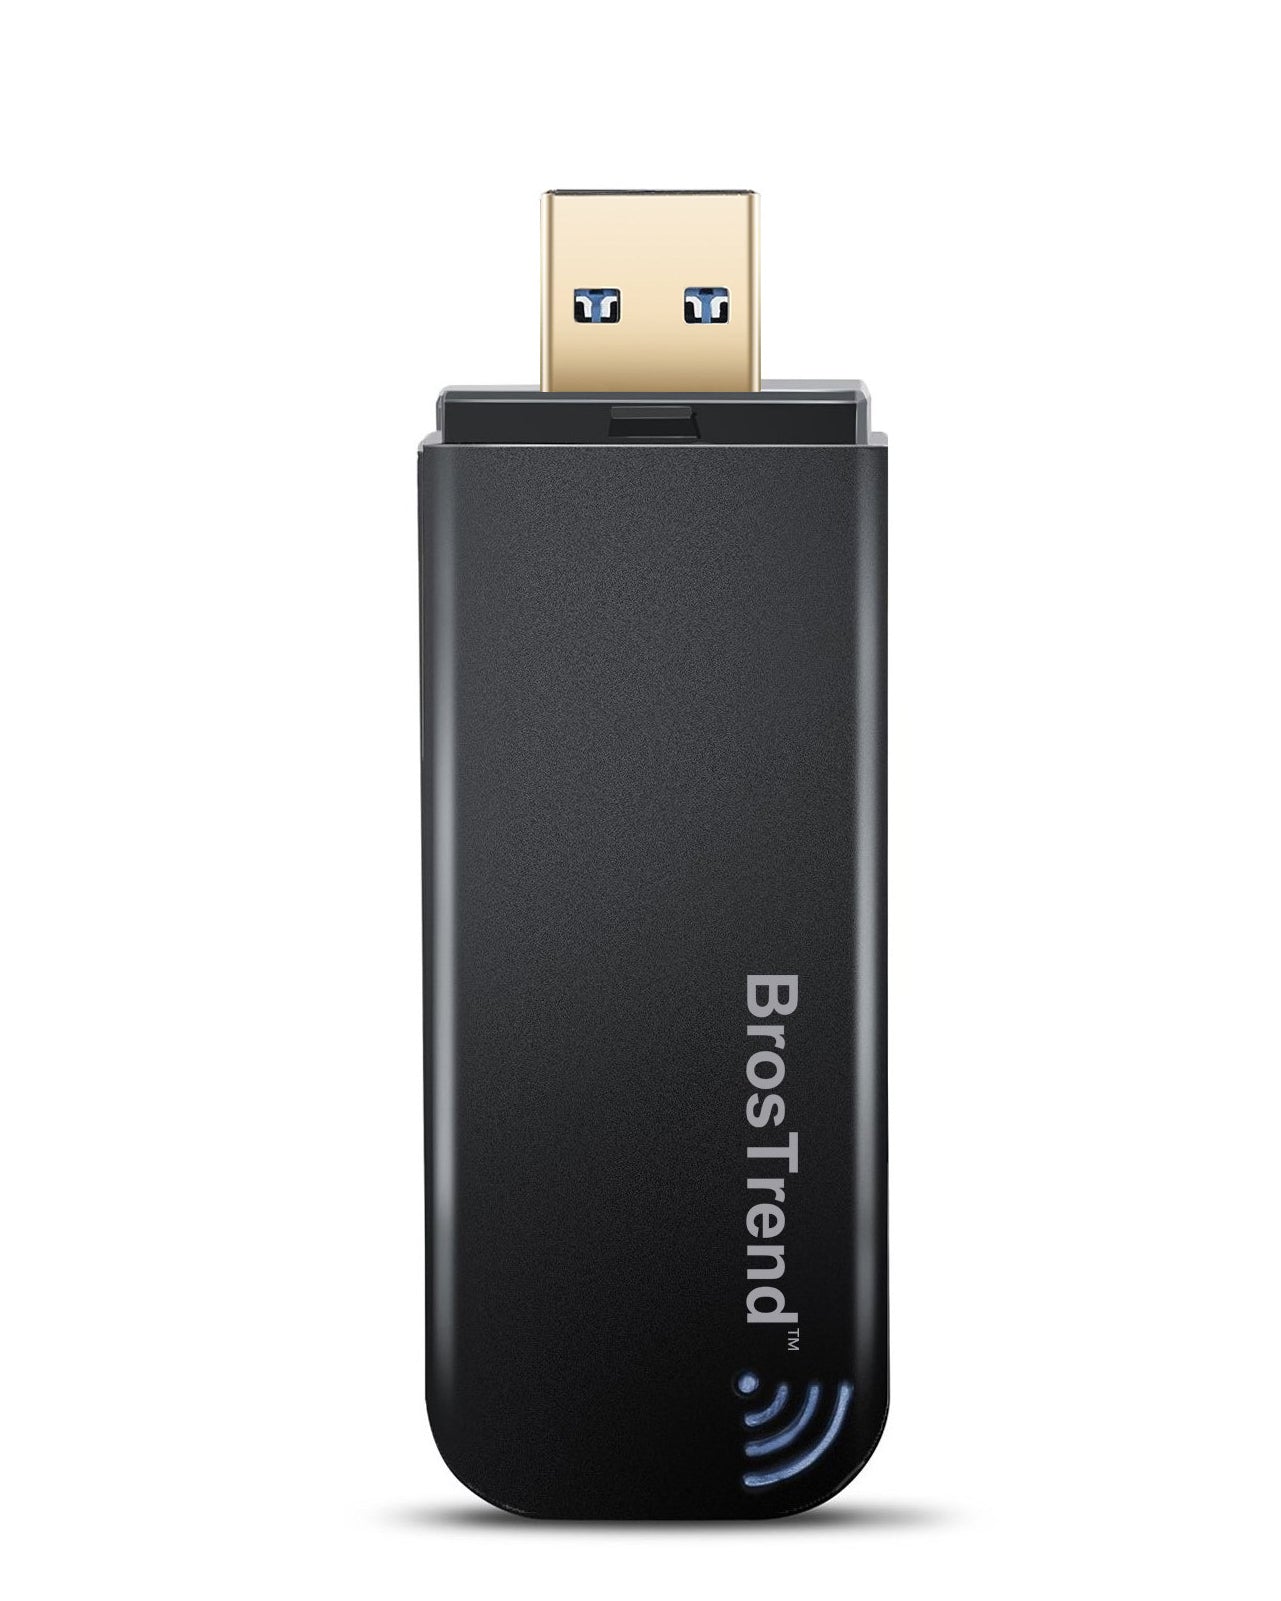 USB Adaptateur